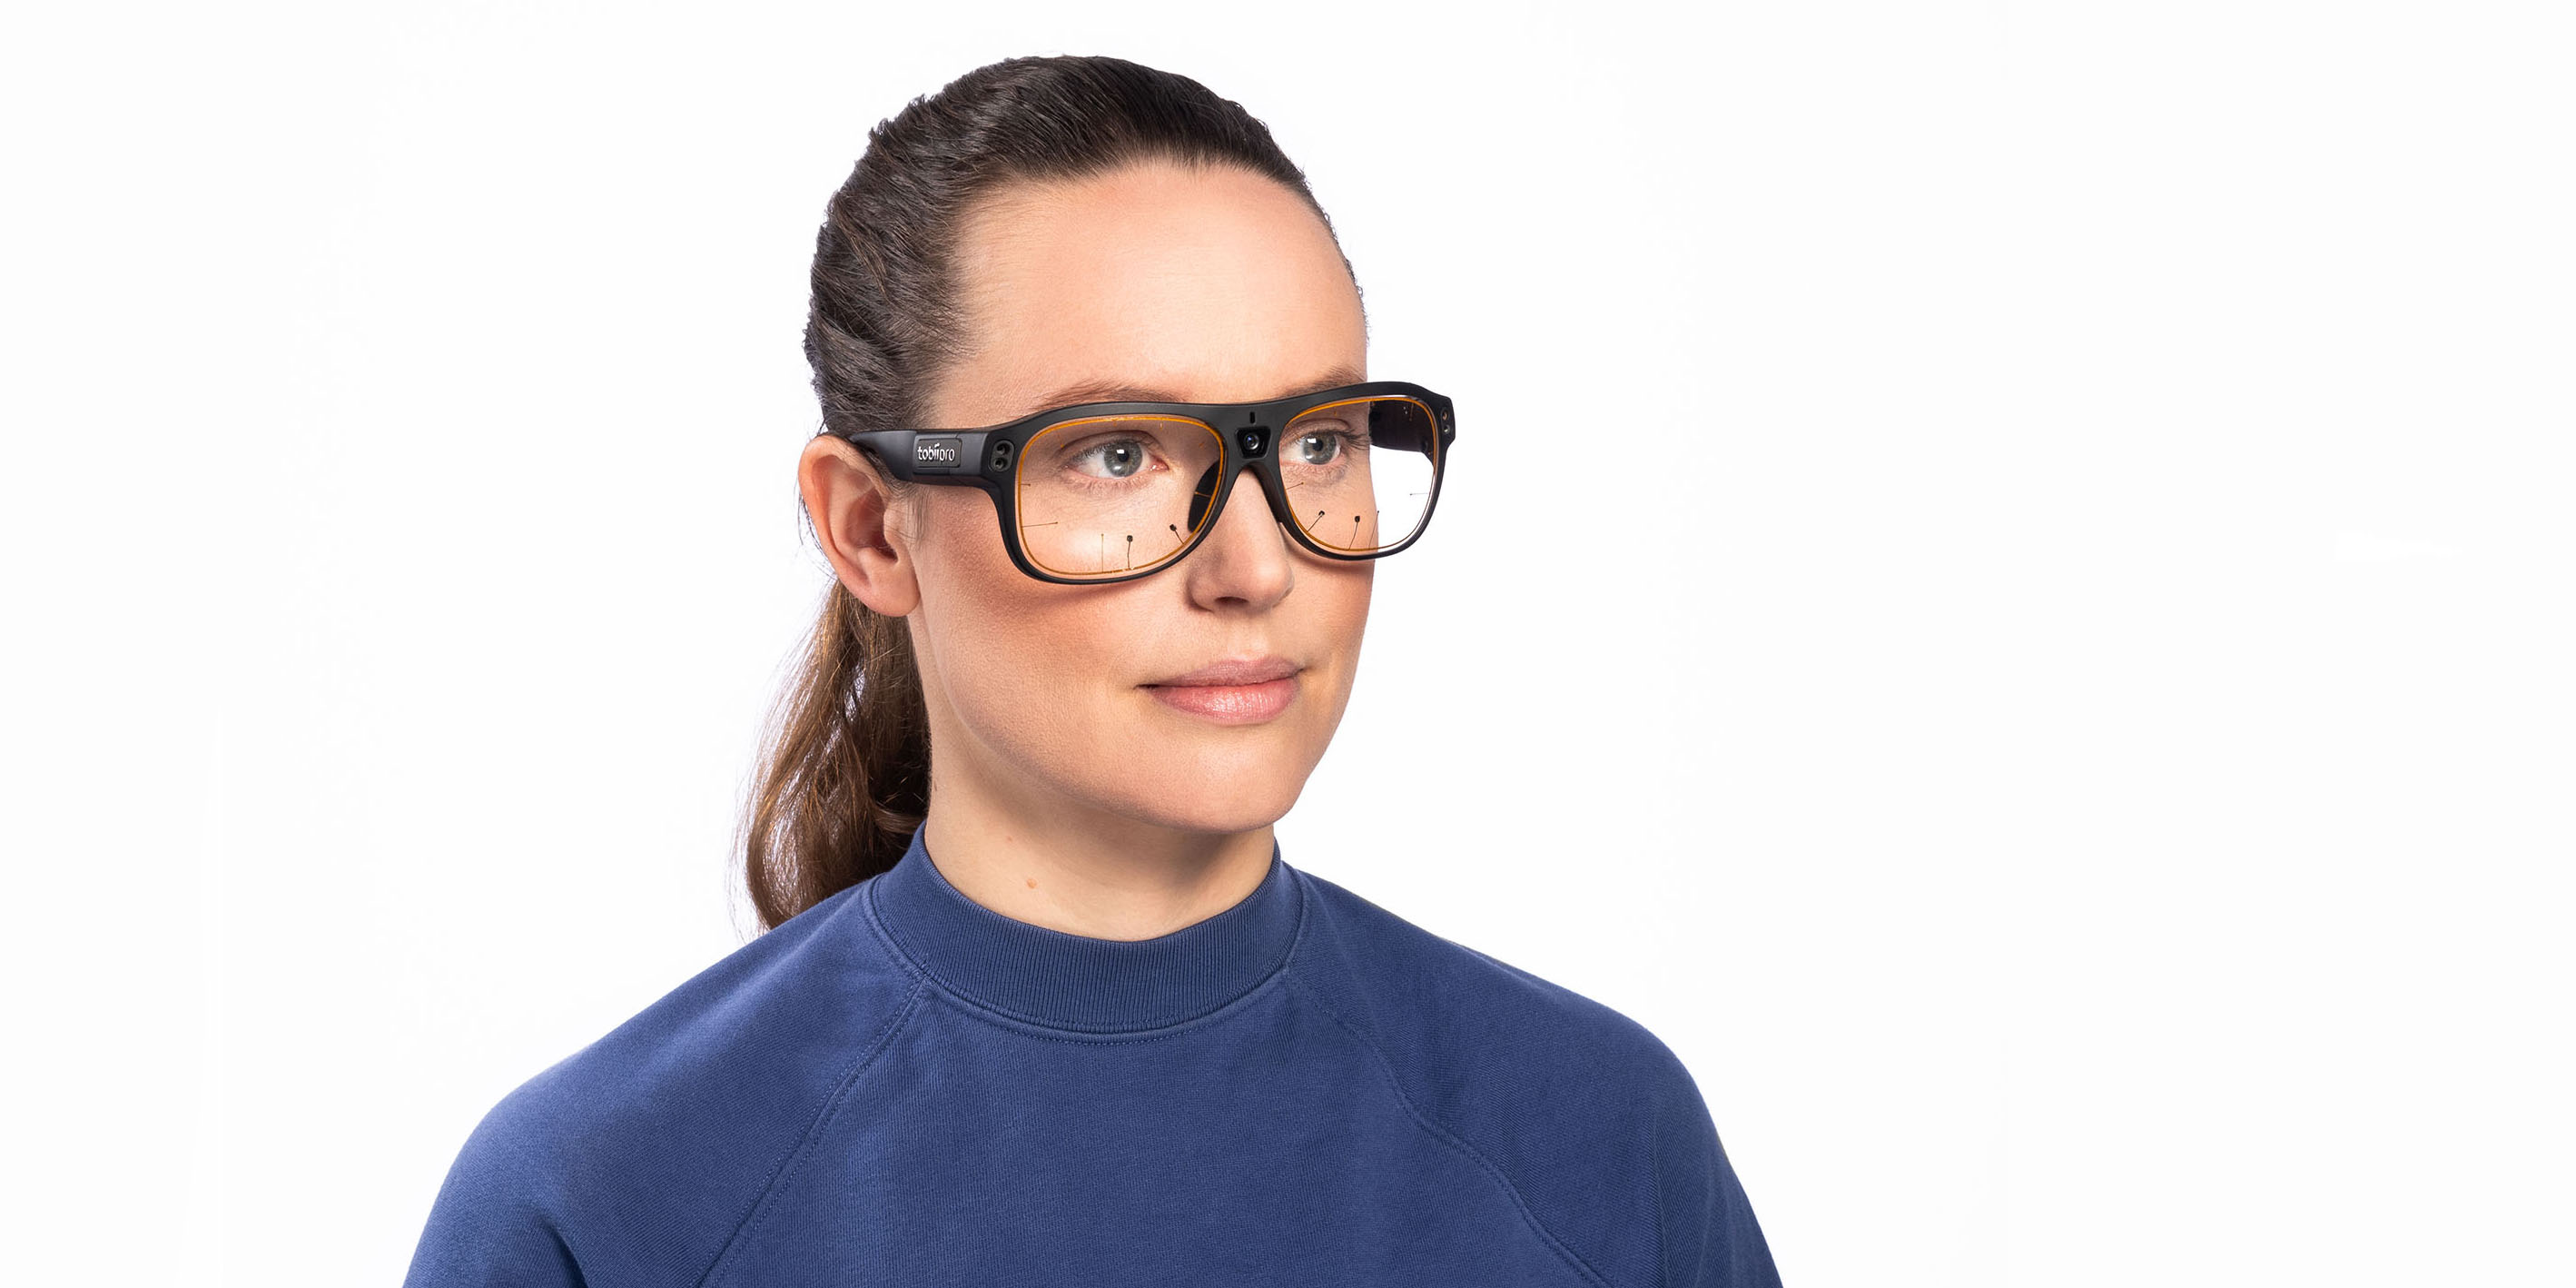 Tobii Pro Glasses 3  Latest in wearable eye tracking - Tobii